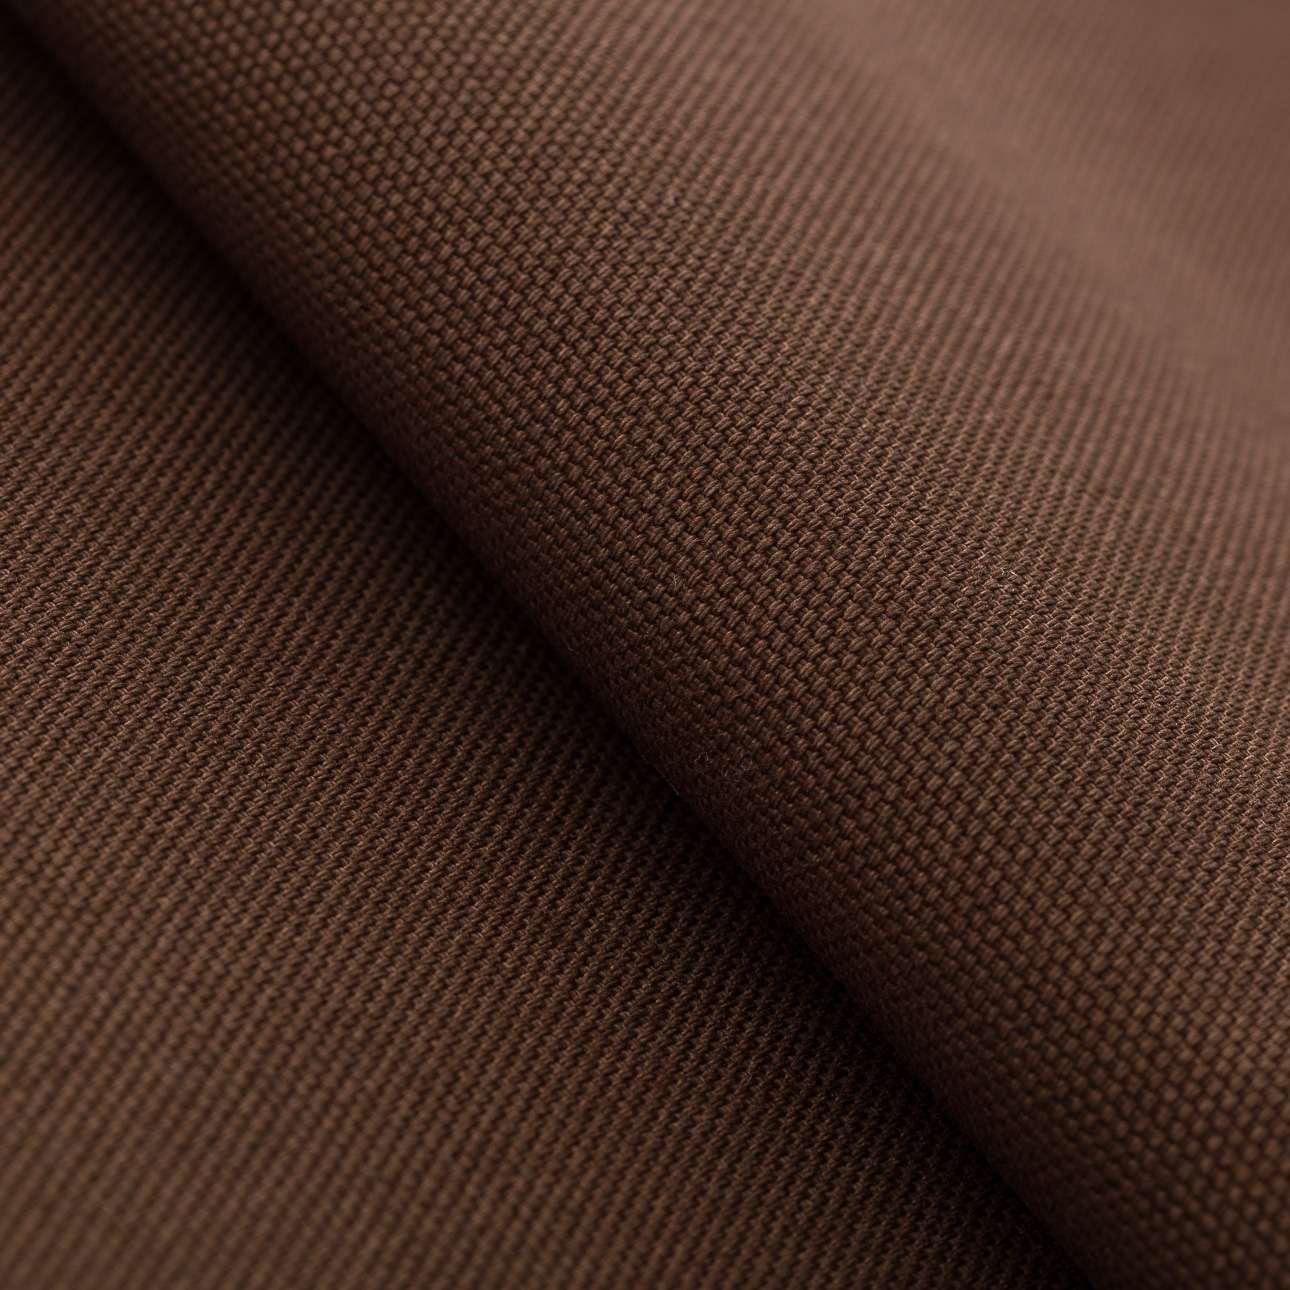 Dekoria cm, mit Vorhang mocca 40 Ösen Cotton x Panama, 130